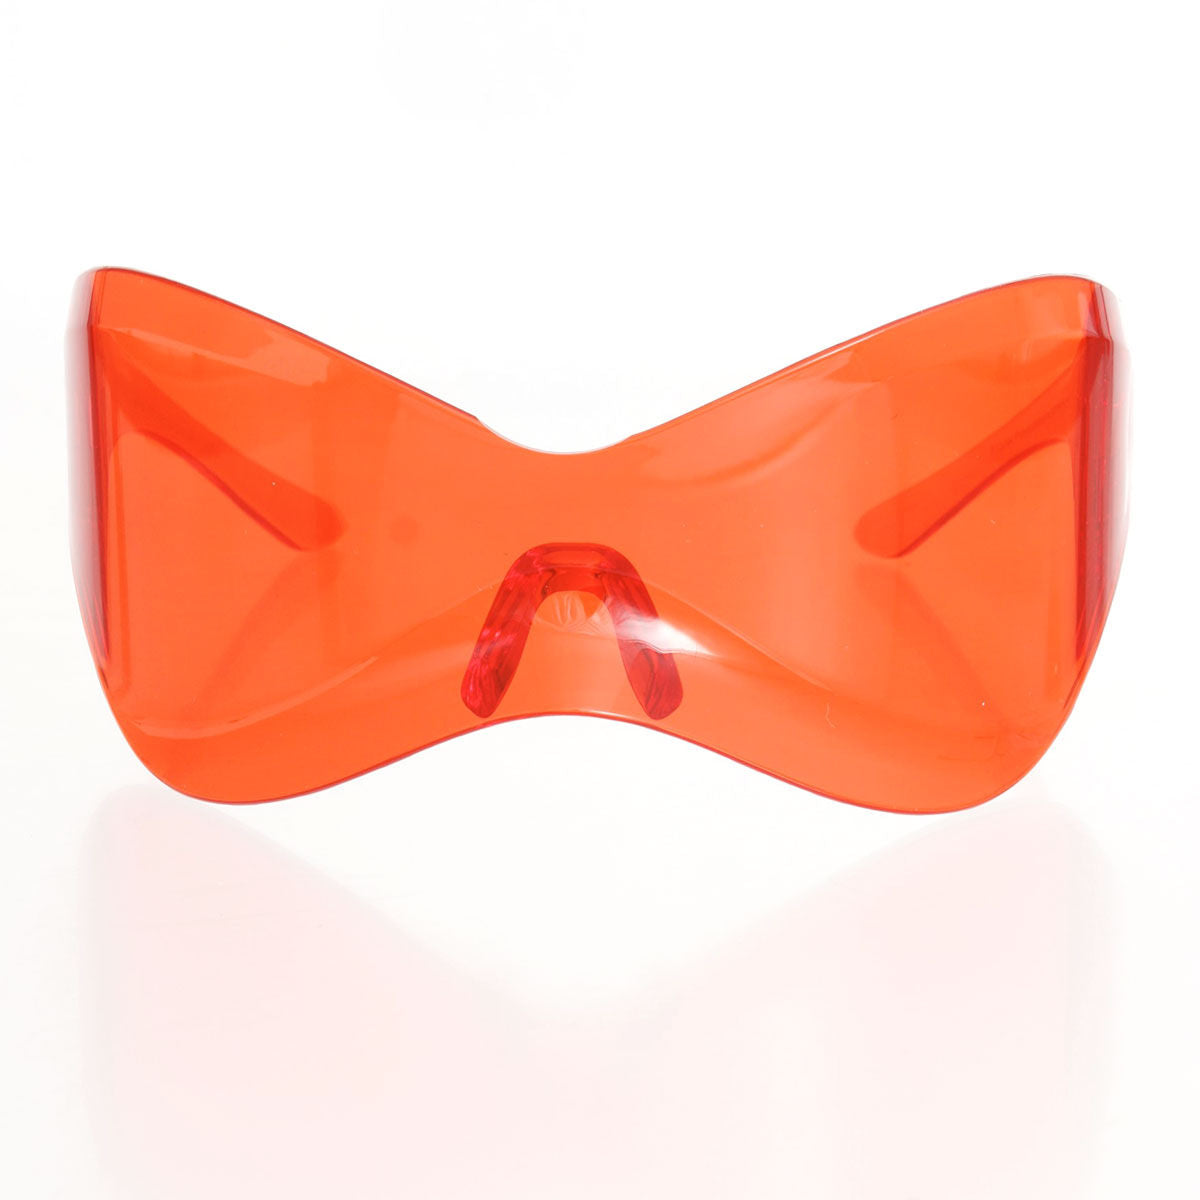 Sunglasses Mask Wrap Red Eyewear for Women